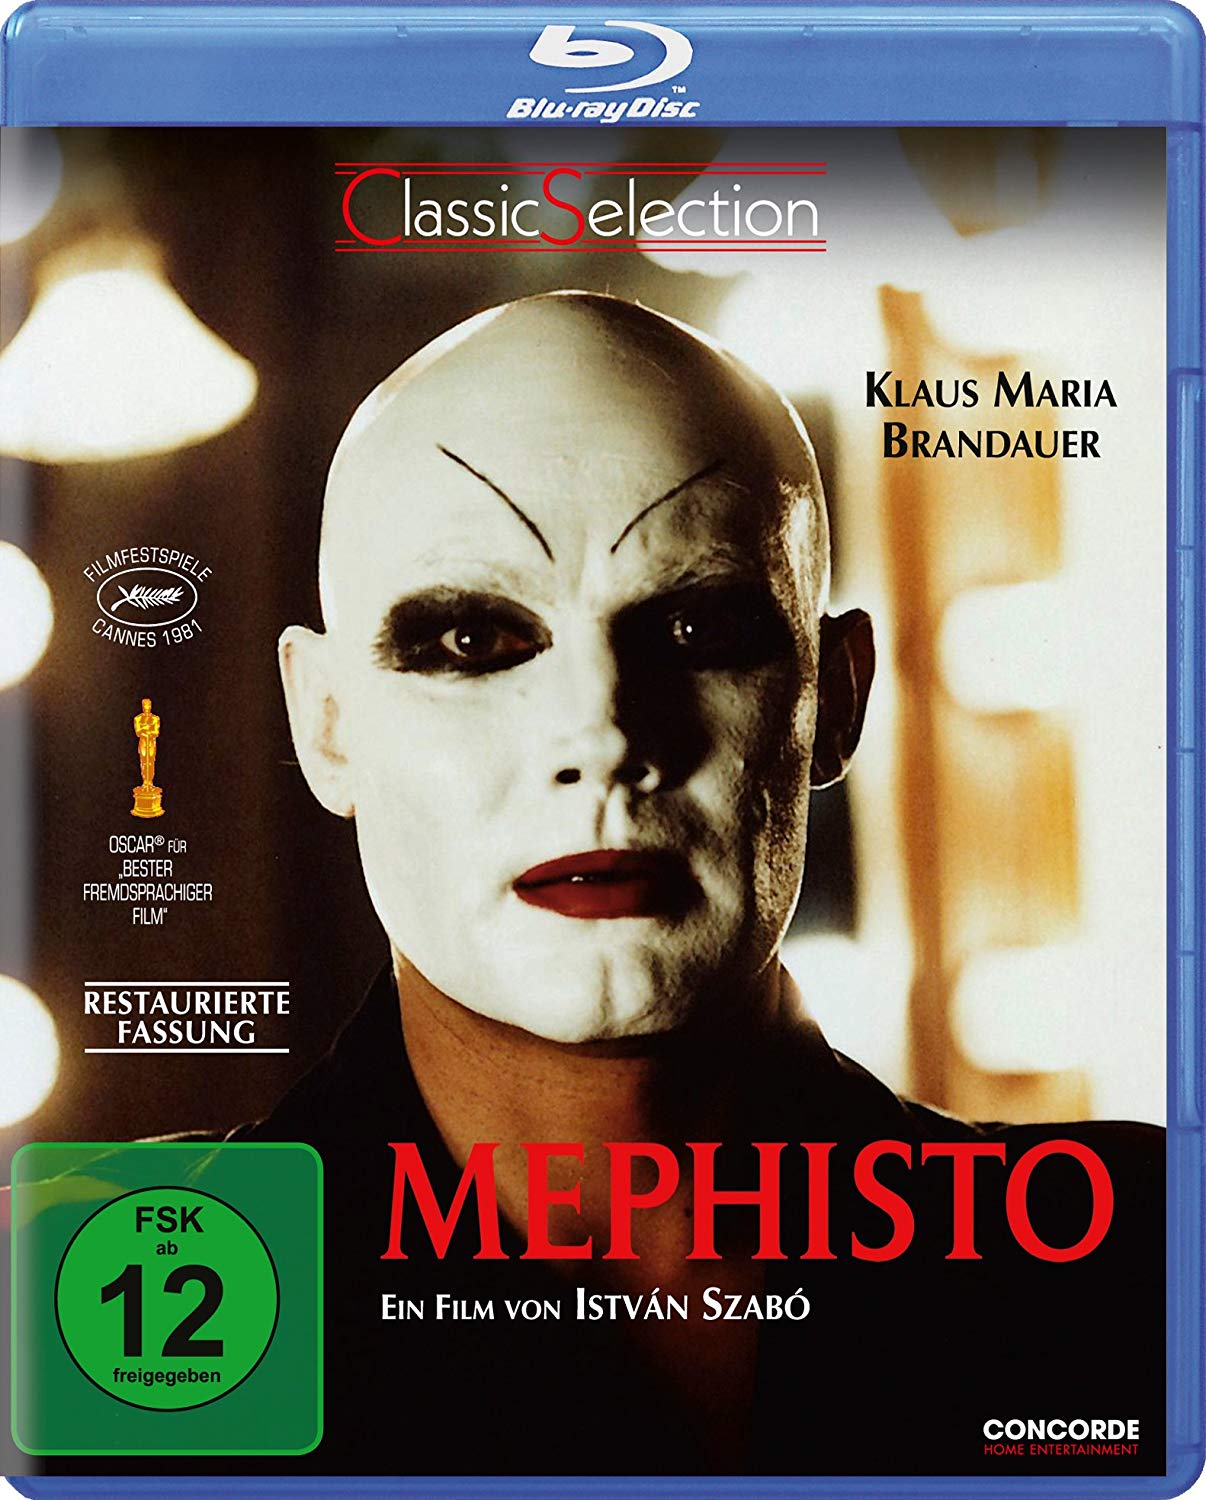 [靡菲斯特].Mephisto.1981.GER.BluRay.AVC.1080p.DTS-HD.MA.1.0-weiwei2001@CHDbits   21.79G-1.jpg